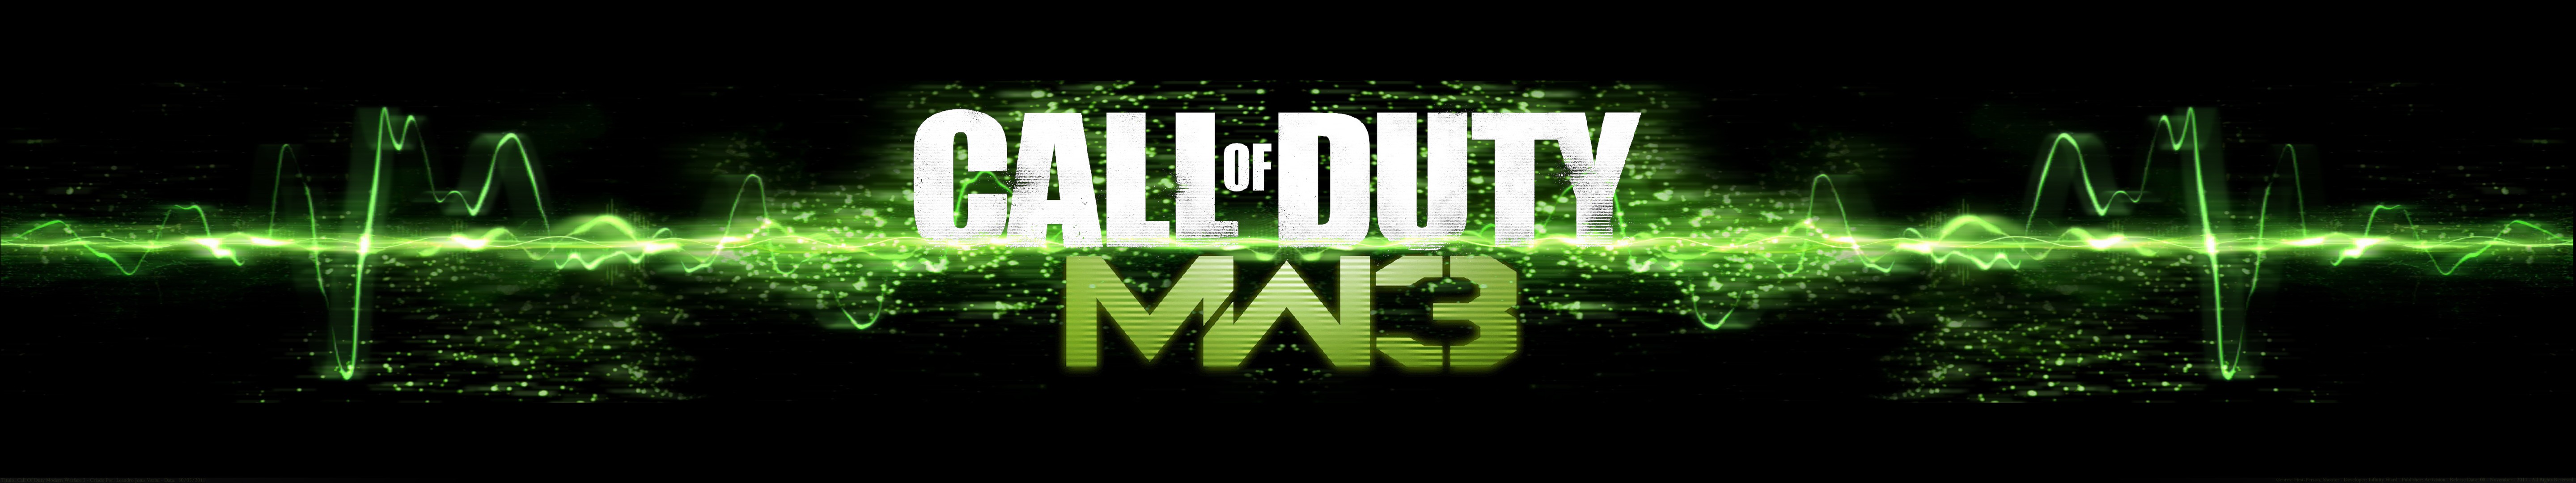 Call Of Duty: Modern Warfare 3, Video Games, Triple Screen, Multiple Display Wallpaper